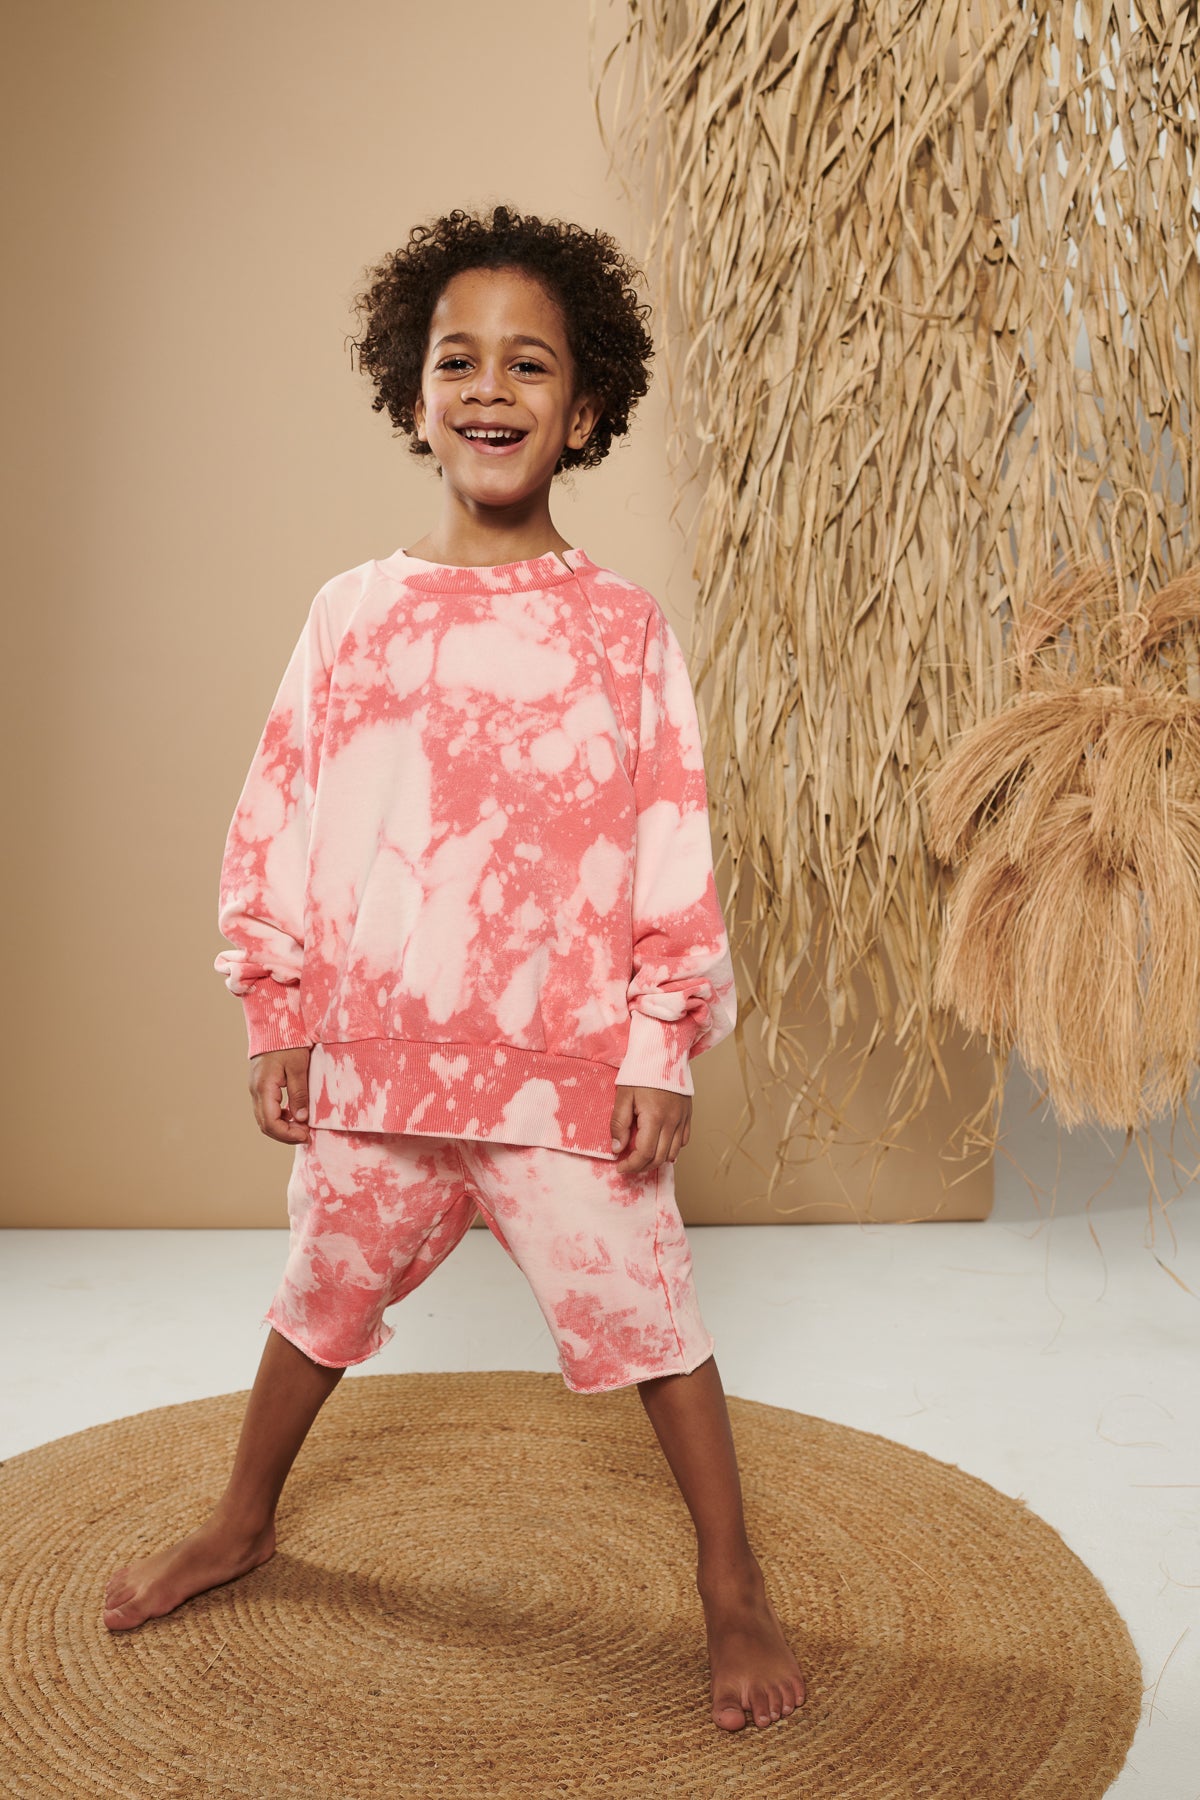 bluza dziecięca- SPLASH SIMPLE SWEATSHIRT ecru/pink